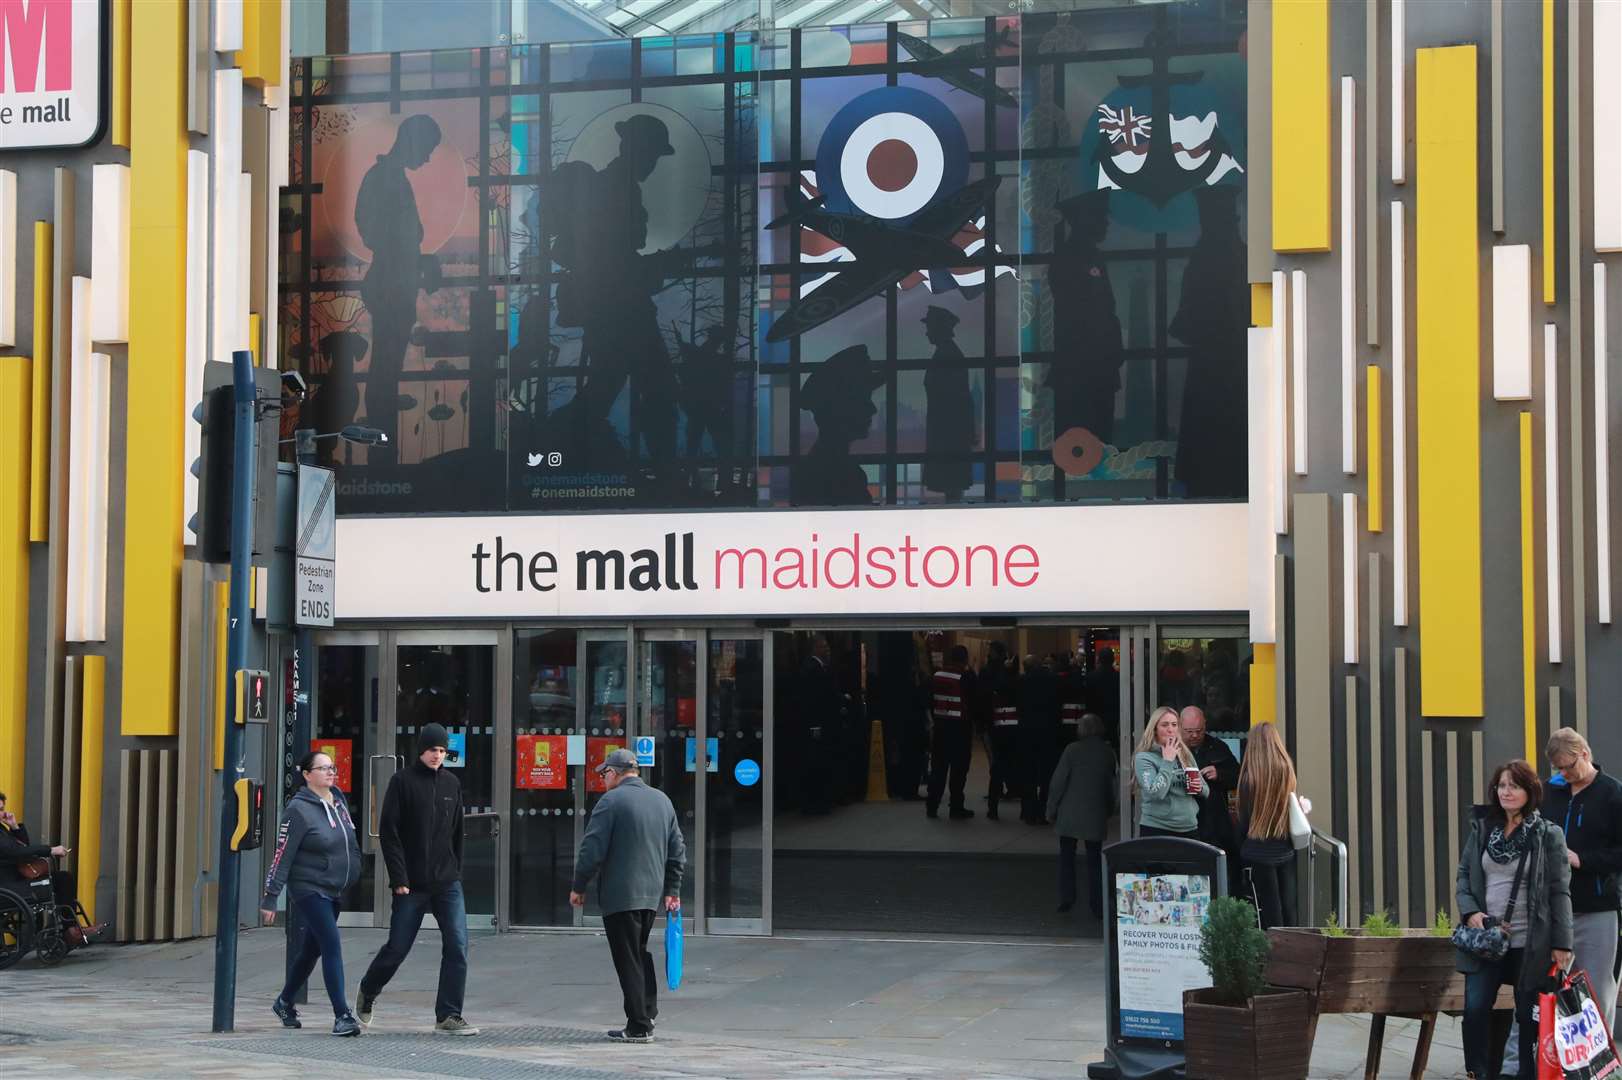 The Mall, Maidstone, where Pavlova's knife was found